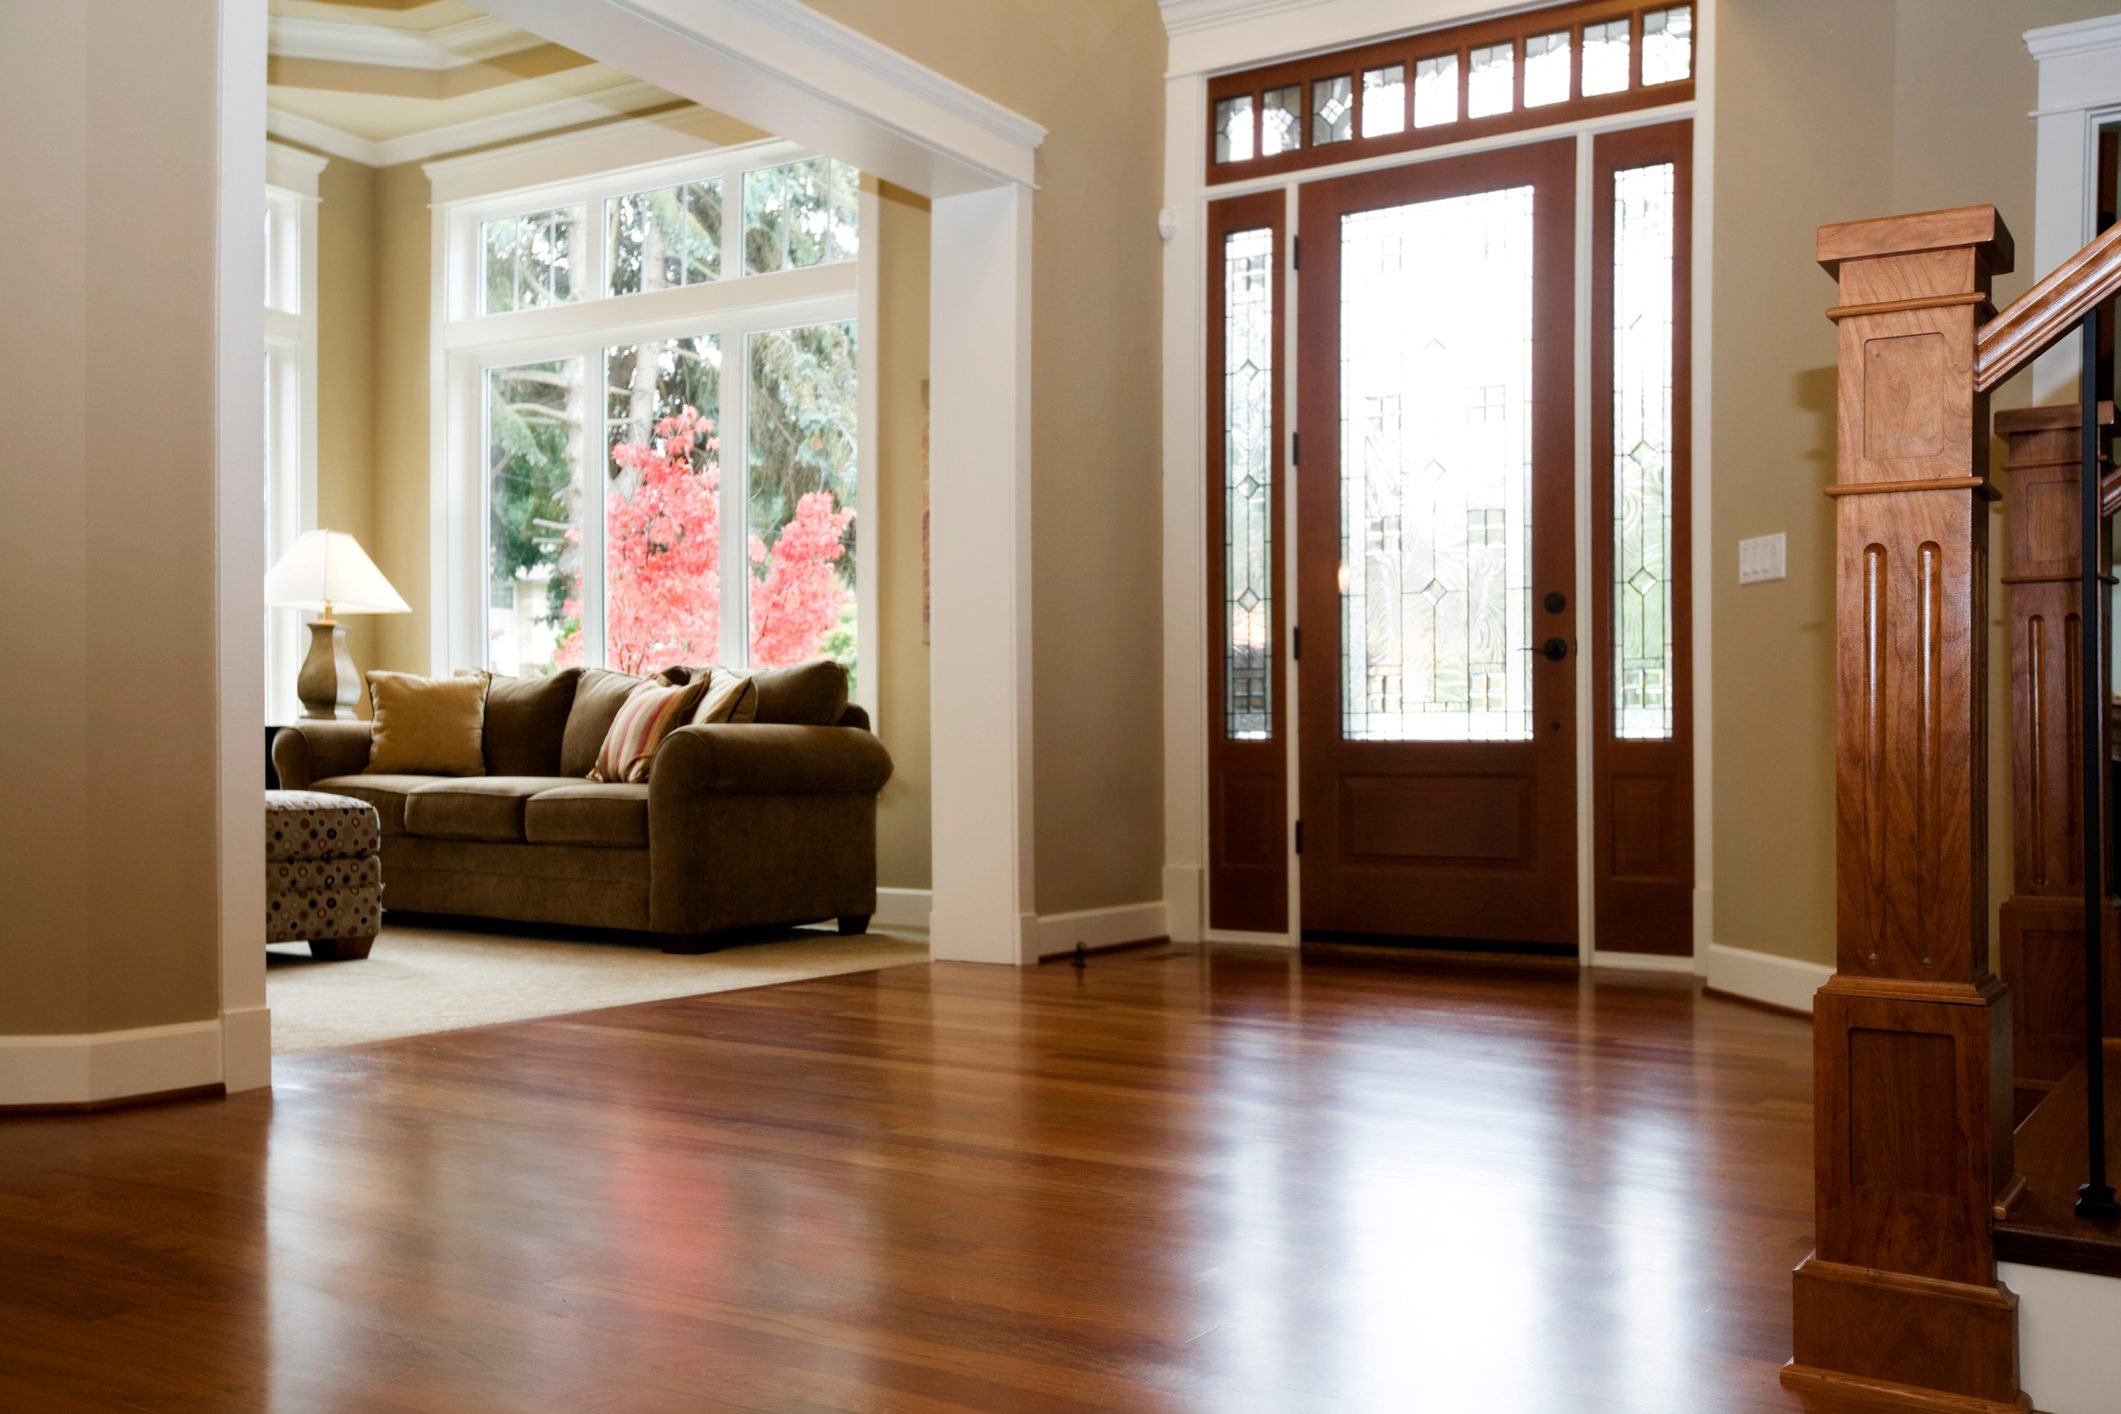 Best Natural Floor Cleaner: Wood & Hardwood - AspenClean